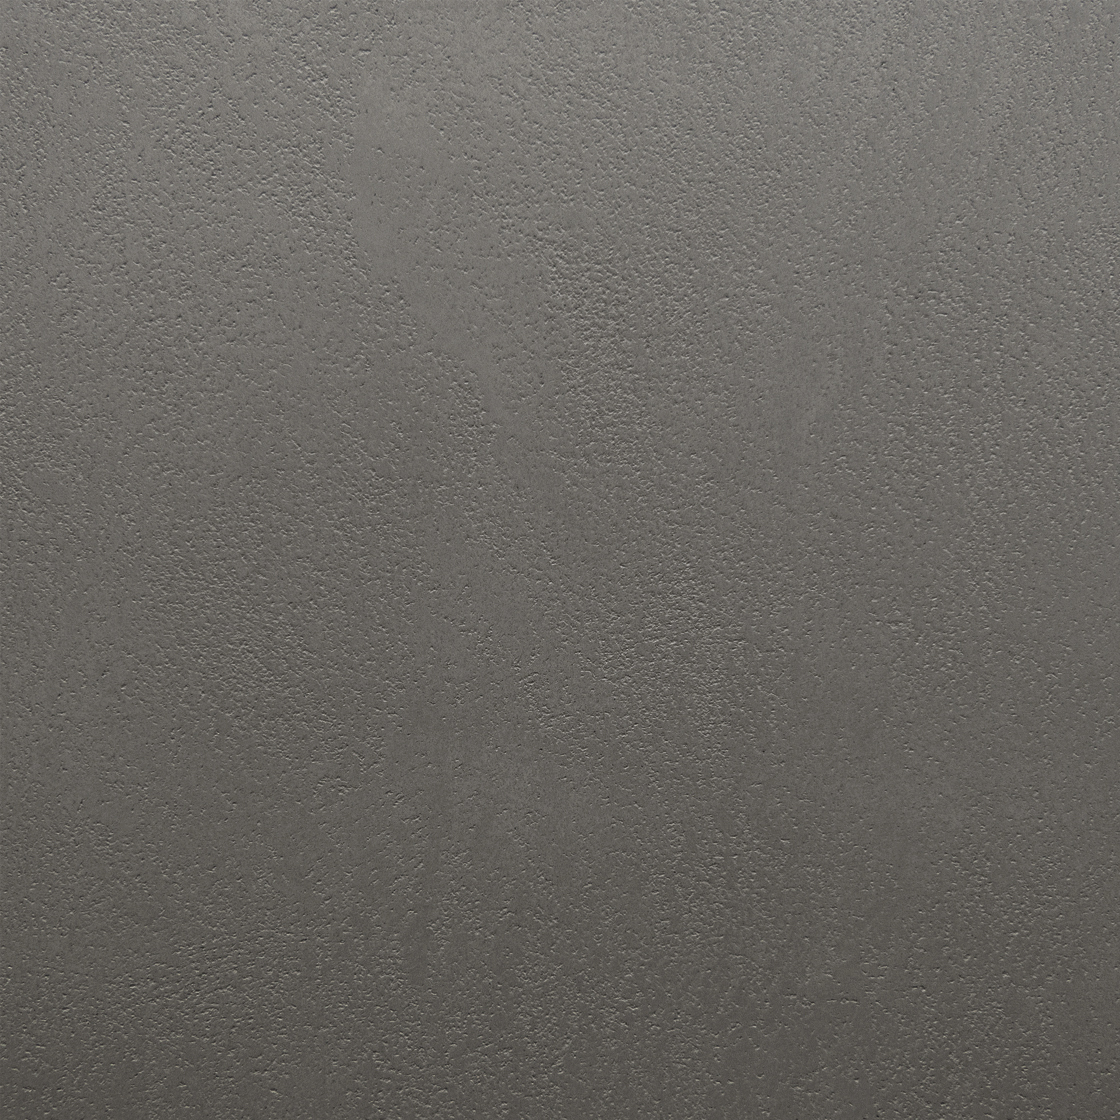 Close up of Armourcoat leatherstone exterior polished plaster finish - 41